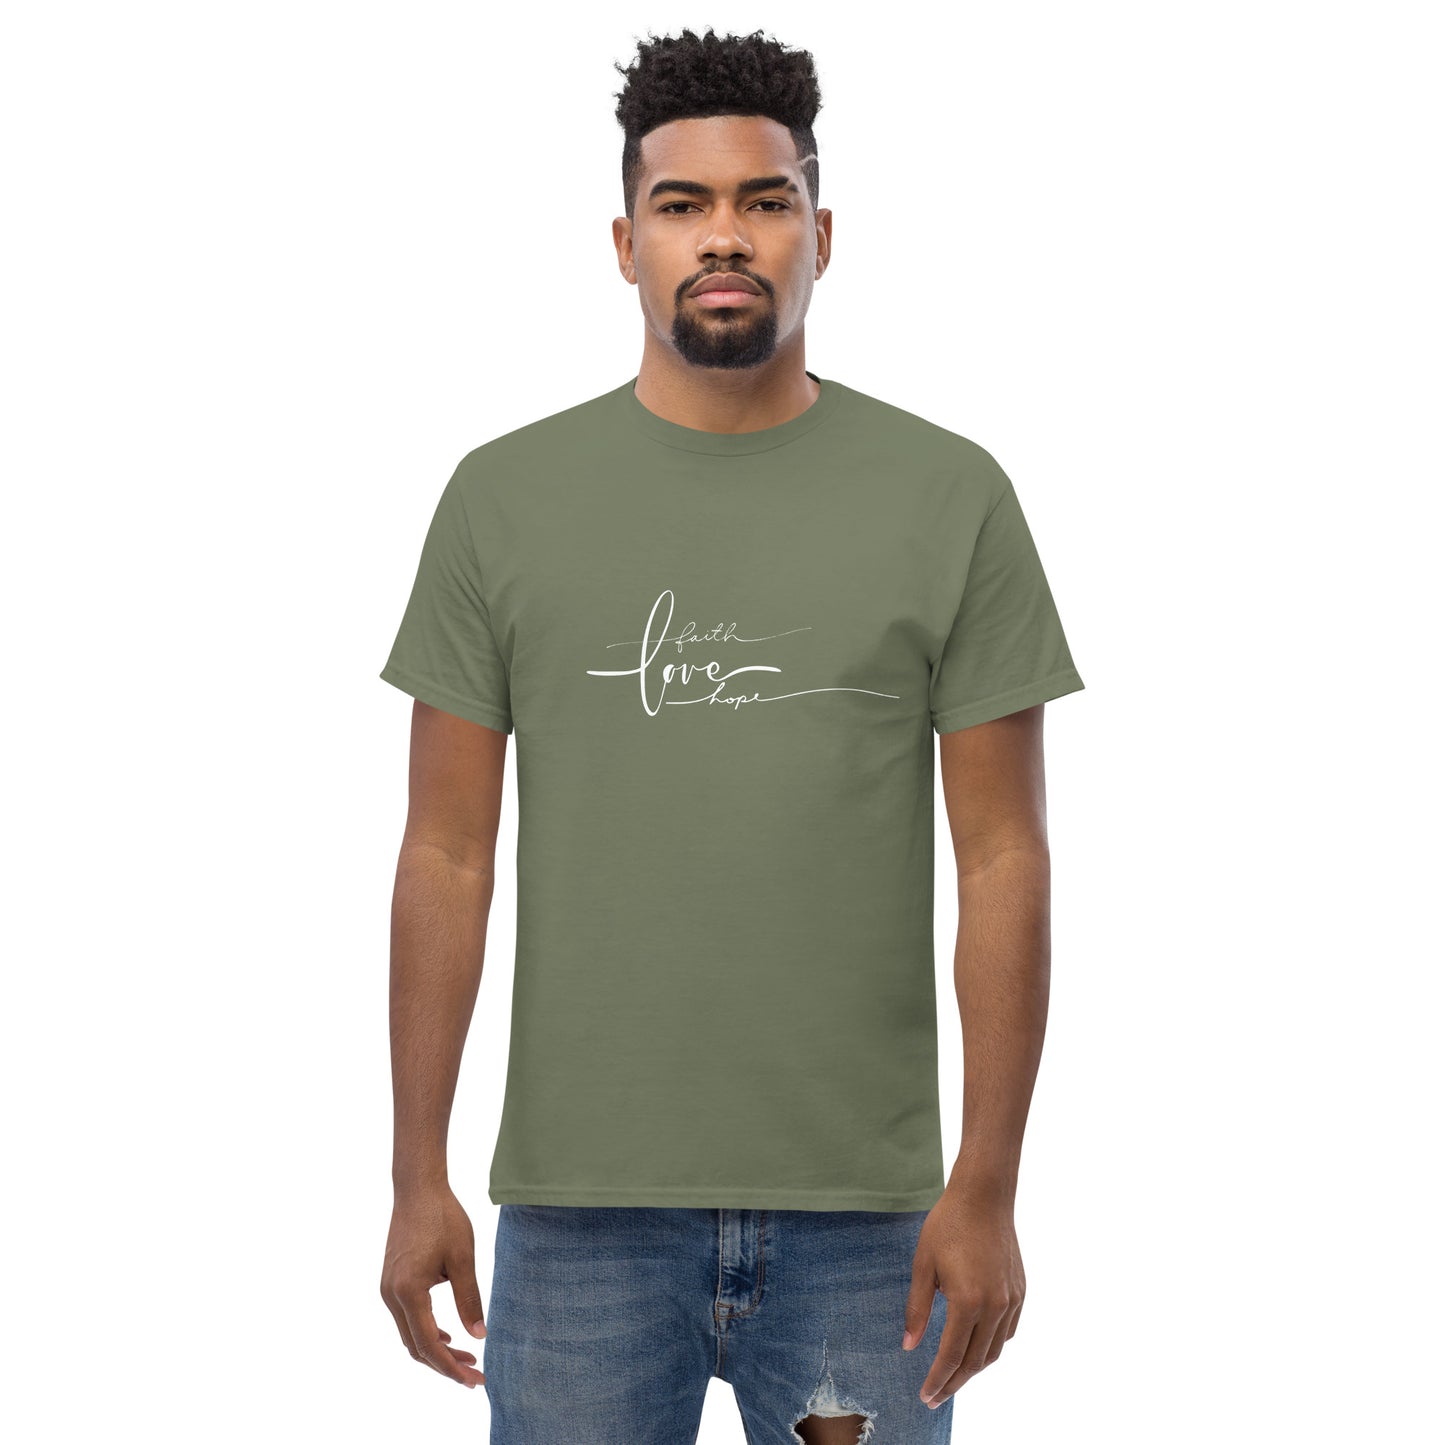 Men's classic Faith Hope Love t shirt